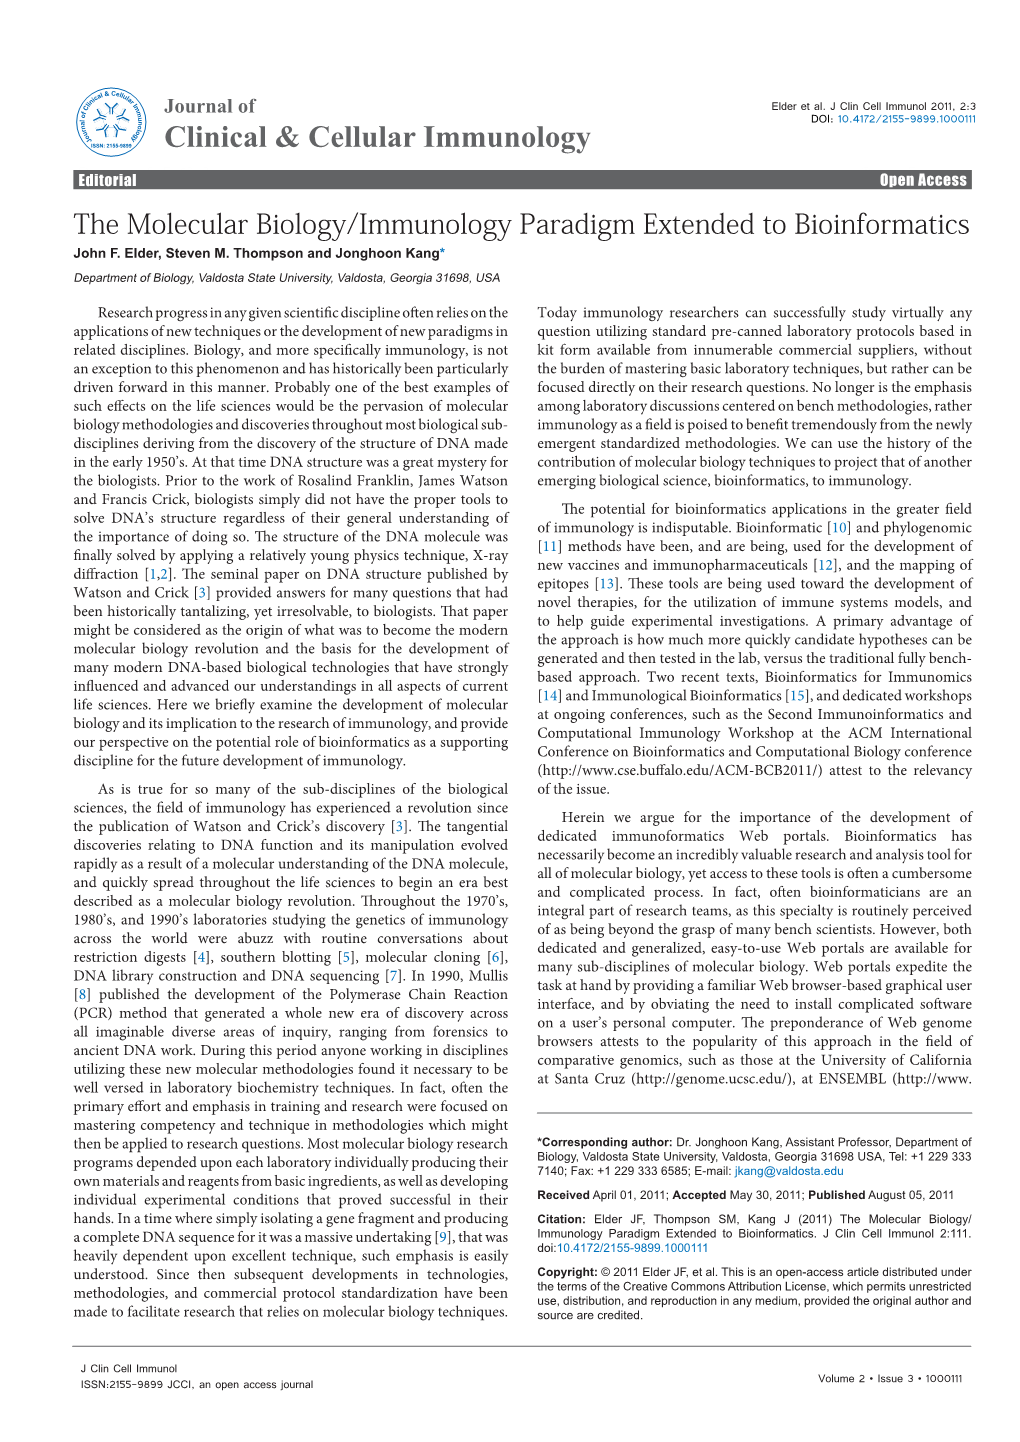 The Molecular Biology/Immunology Paradigm Extended to Bioinformatics John F